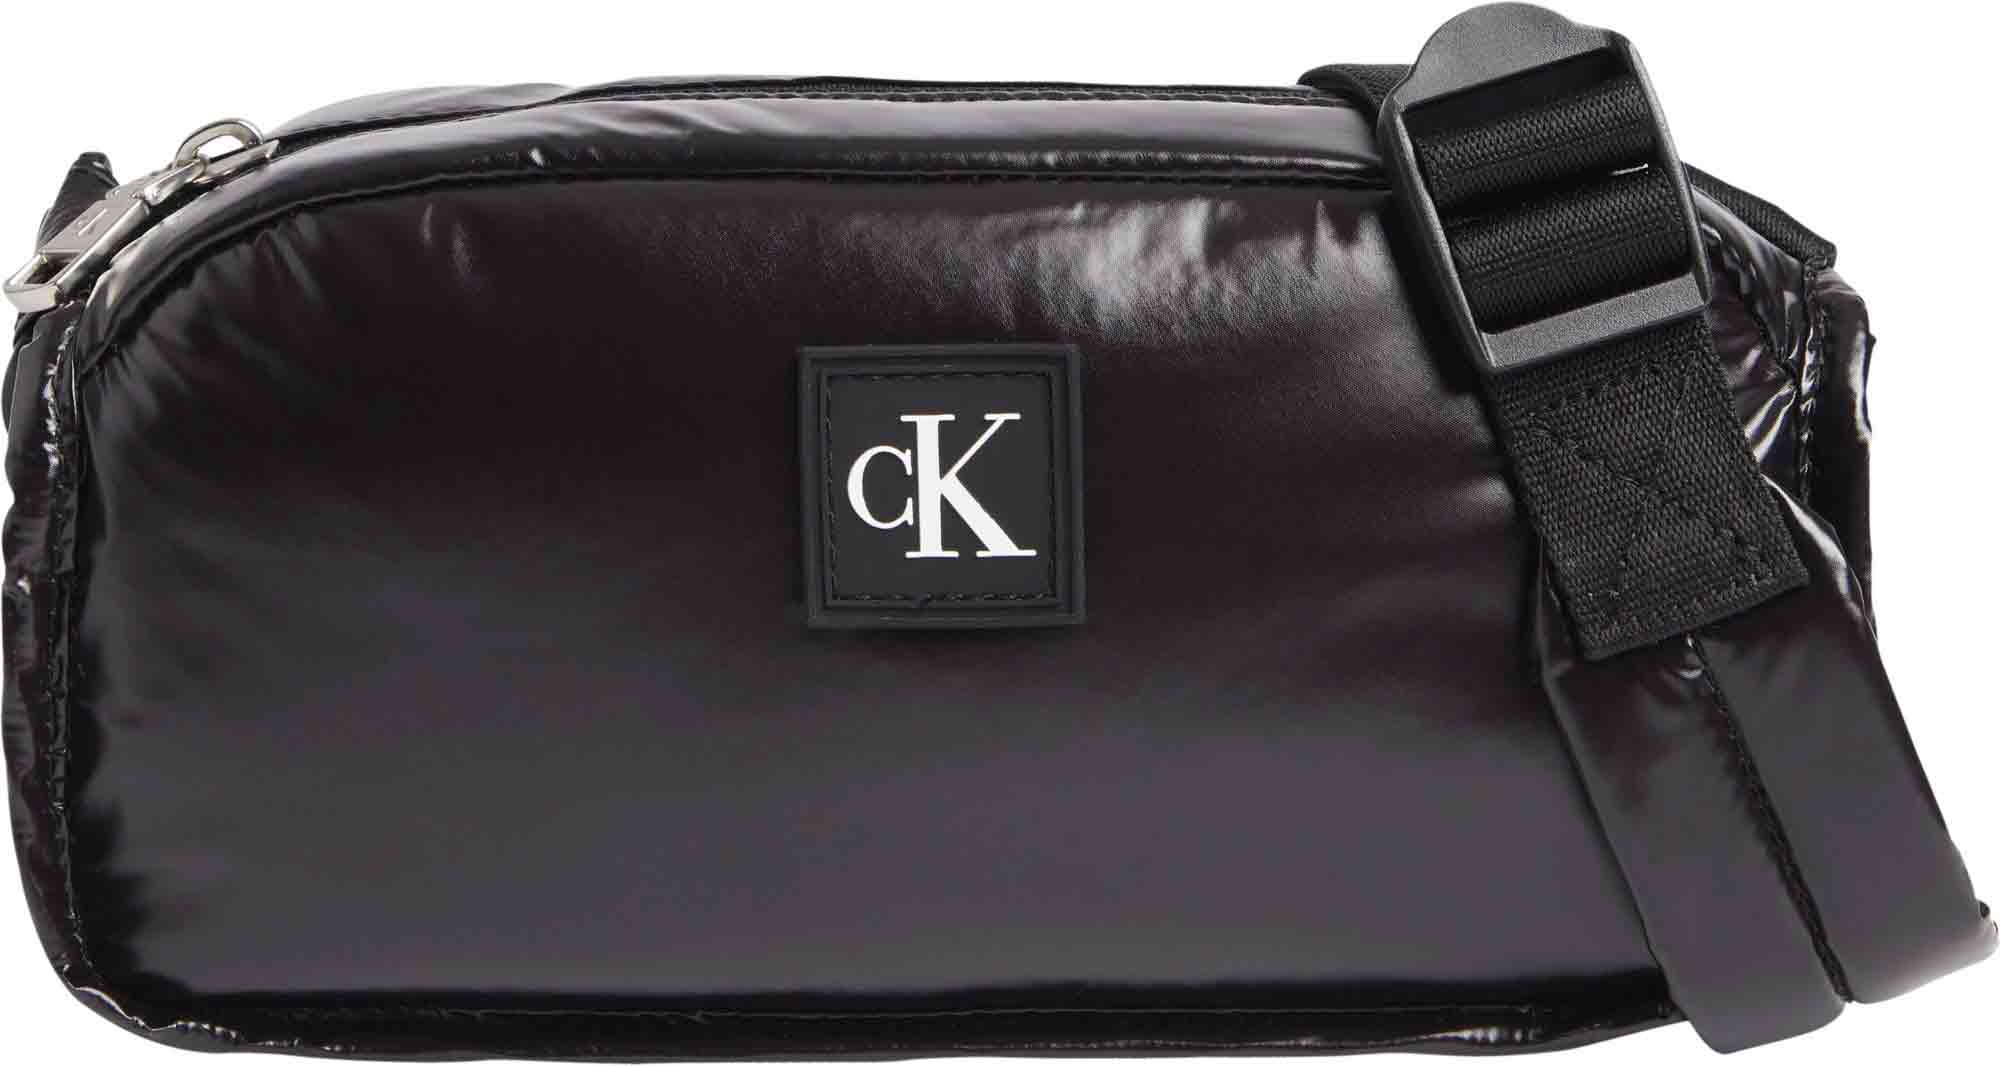 Calvin Klein Jeans Woman's Bag 8719856985370